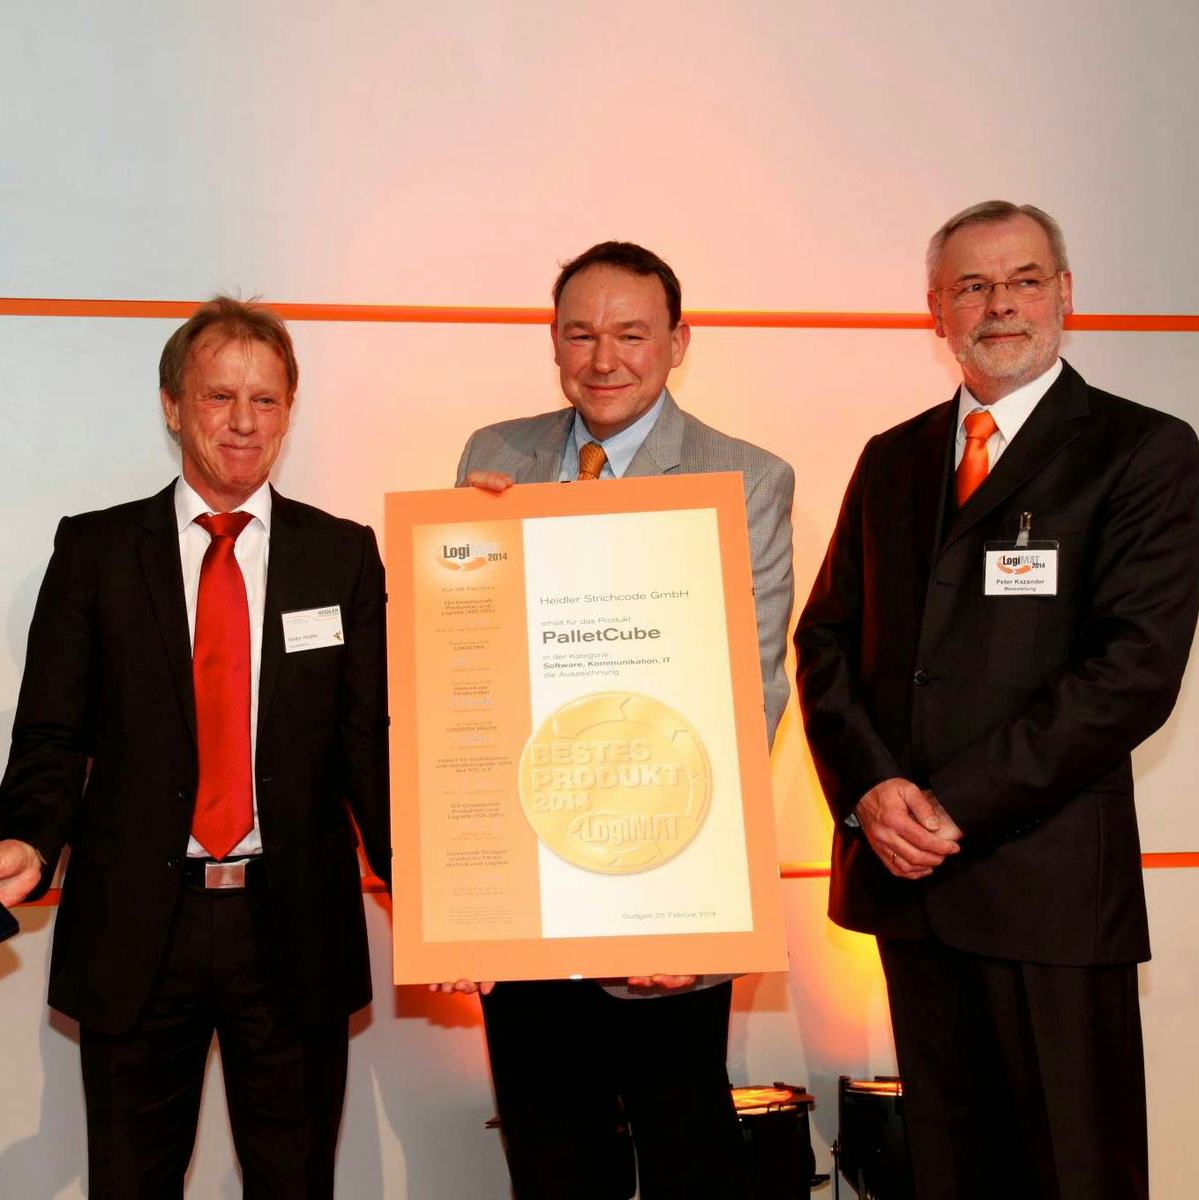 Palletcube wint Logimat 'Best Product Award